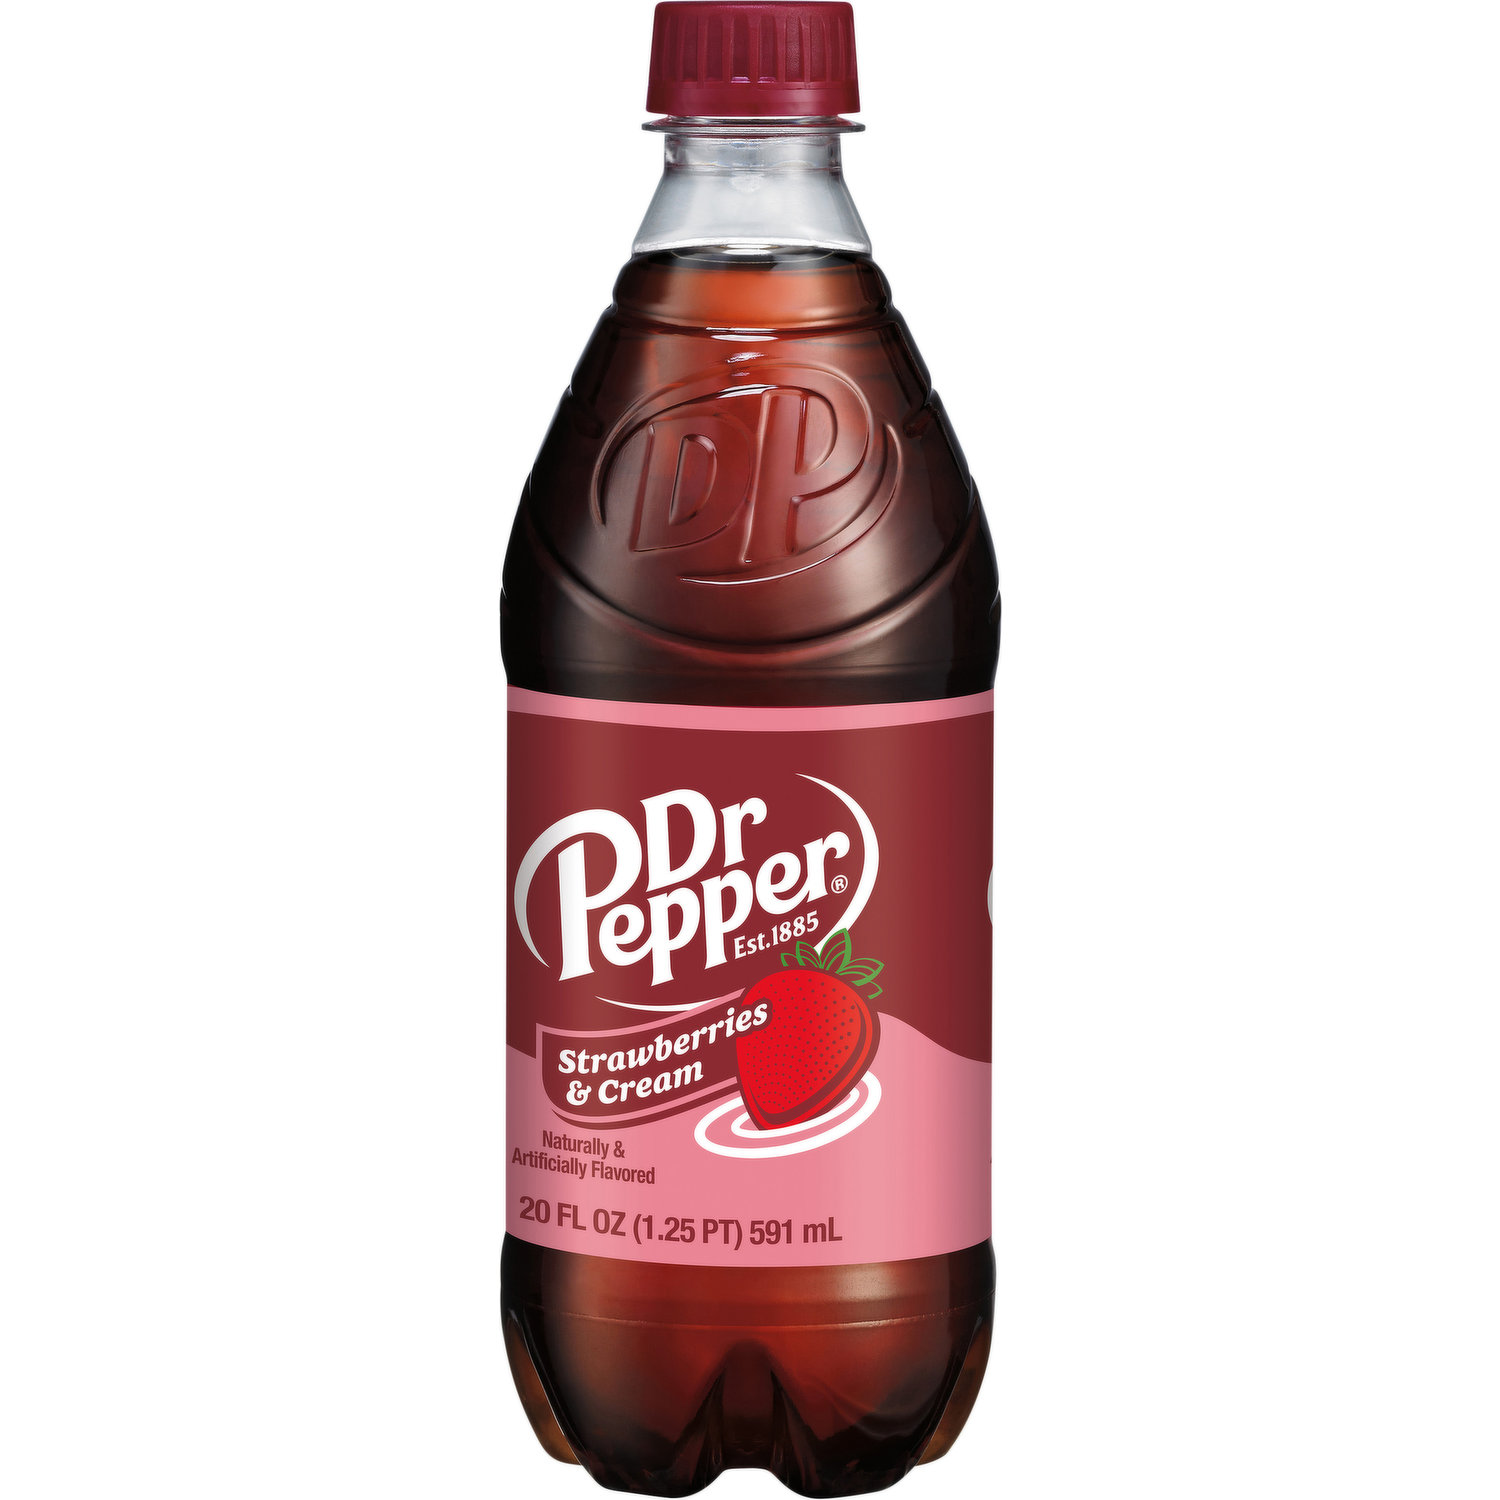 New Items: Dr Pepper Strawberries & Cream - Price Chopper - Market 32